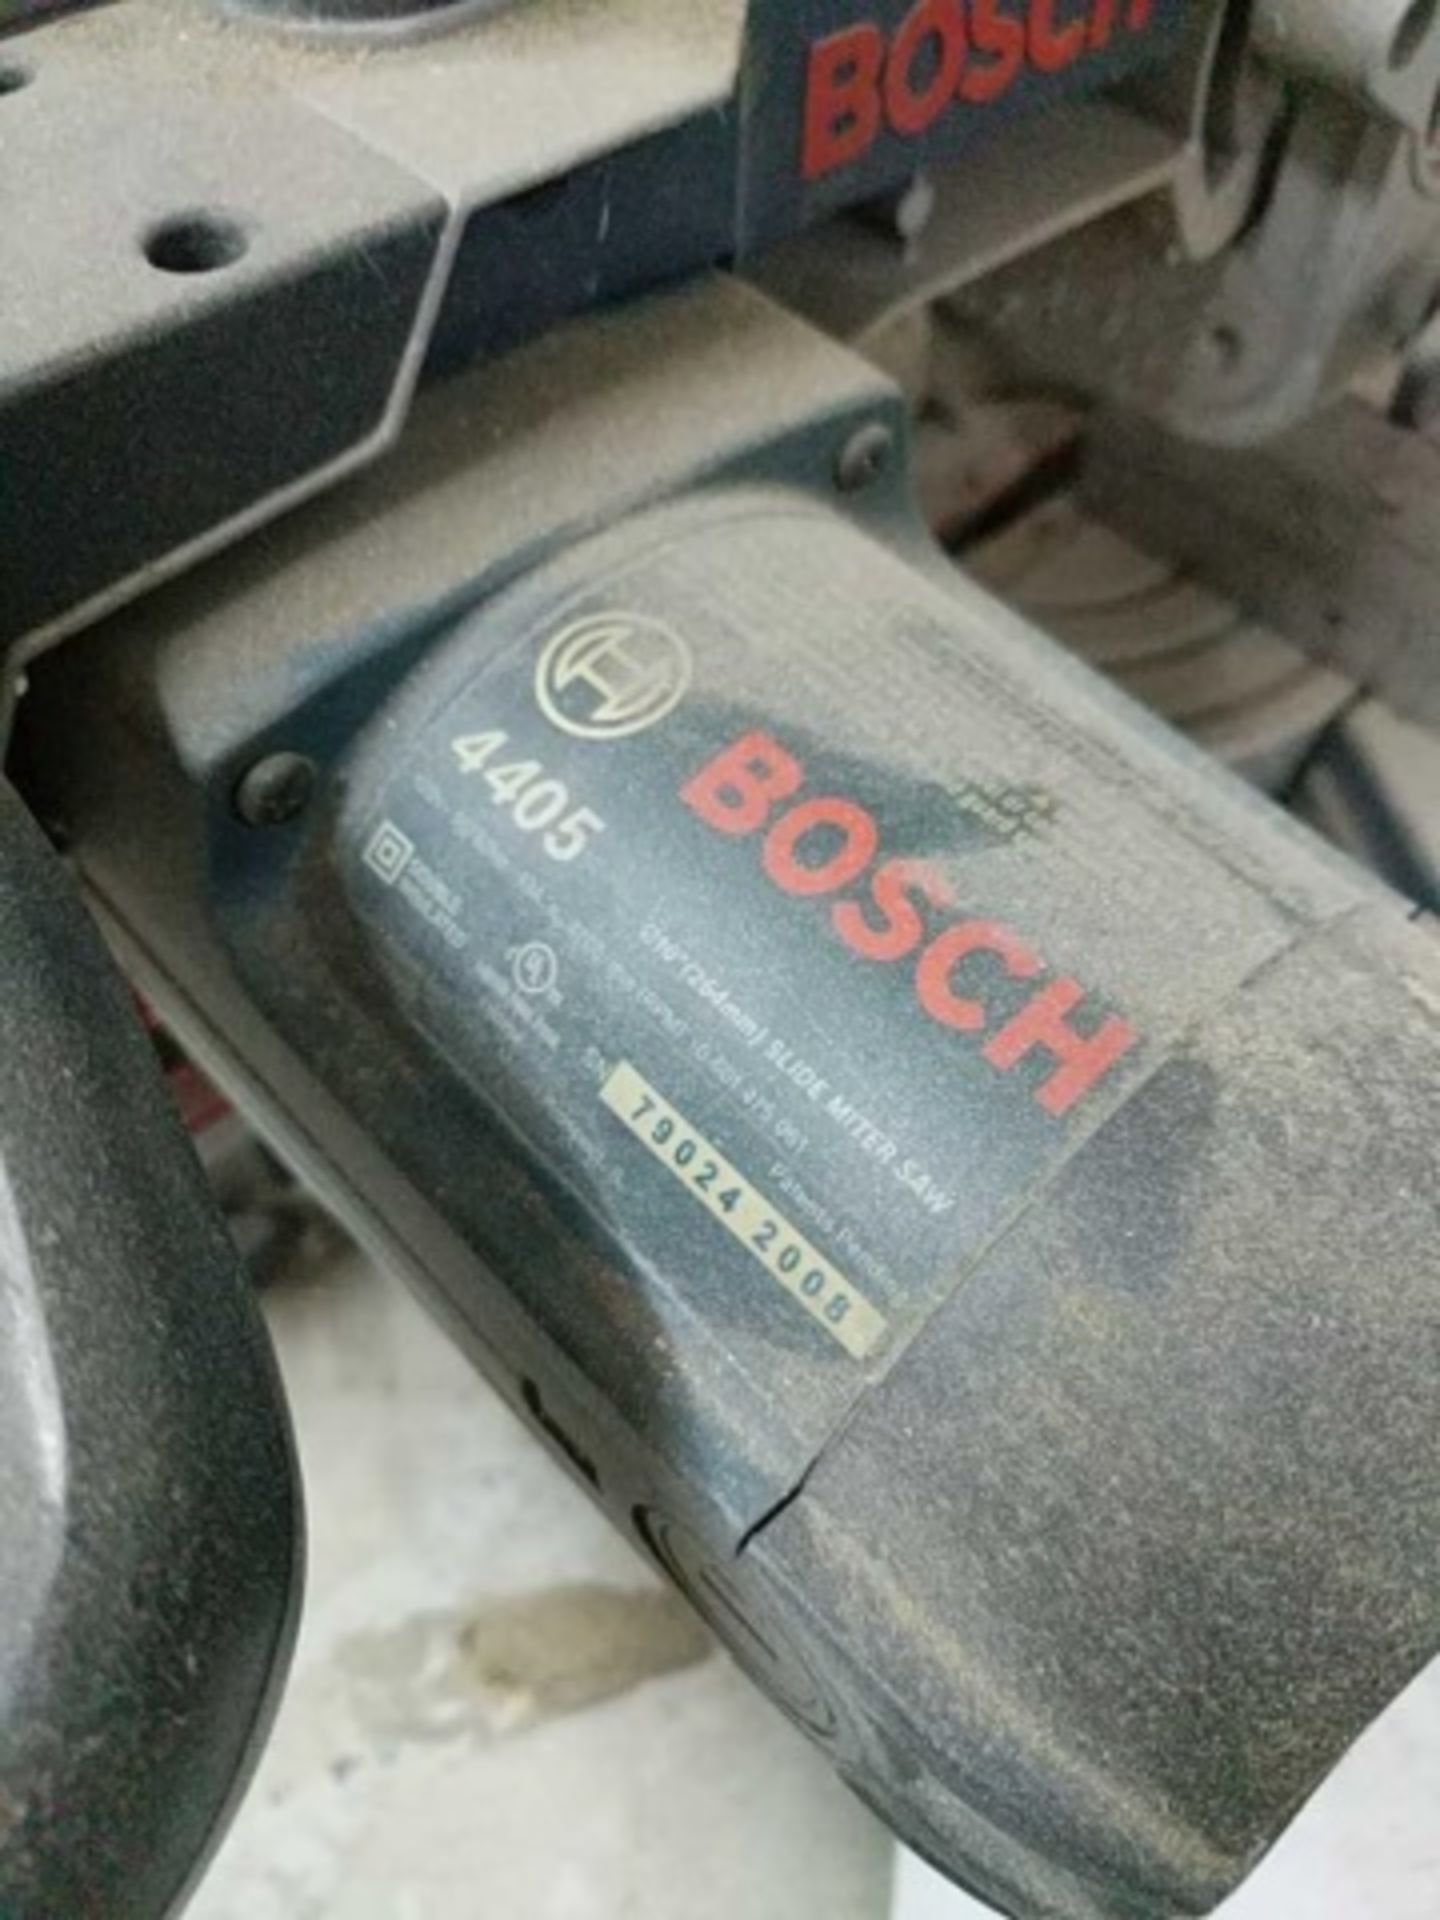 Bosch 4405, 10" Sliding Miter Saw - Image 2 of 4